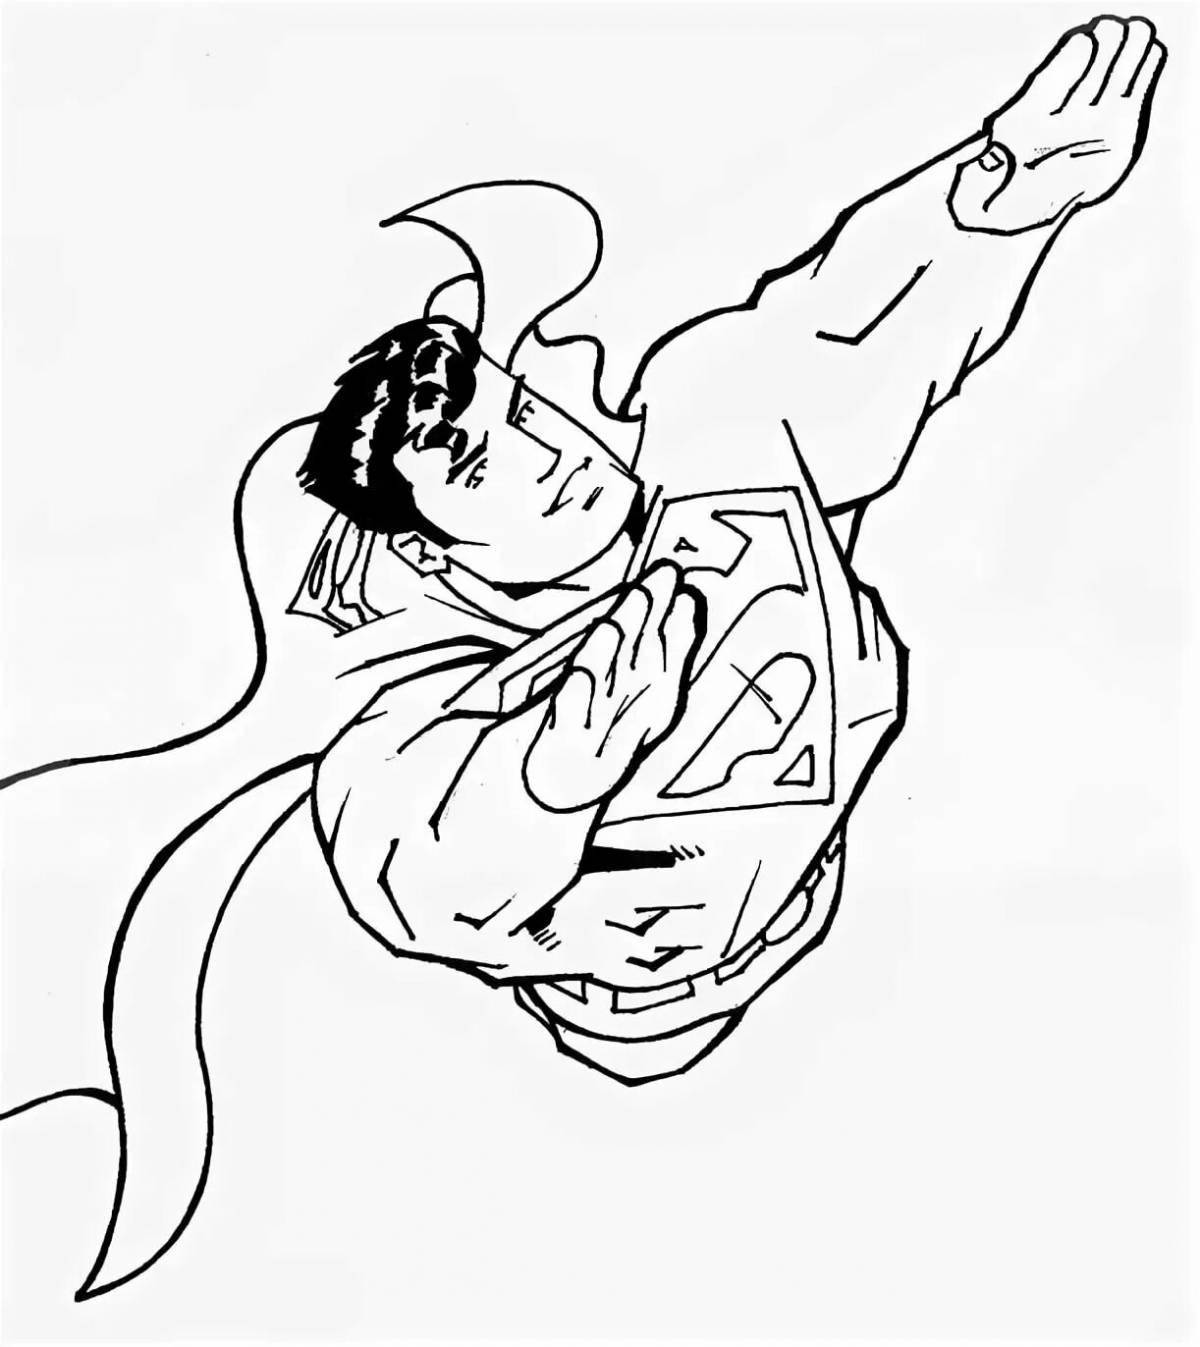 Amazing Jutsu Heroes coloring page